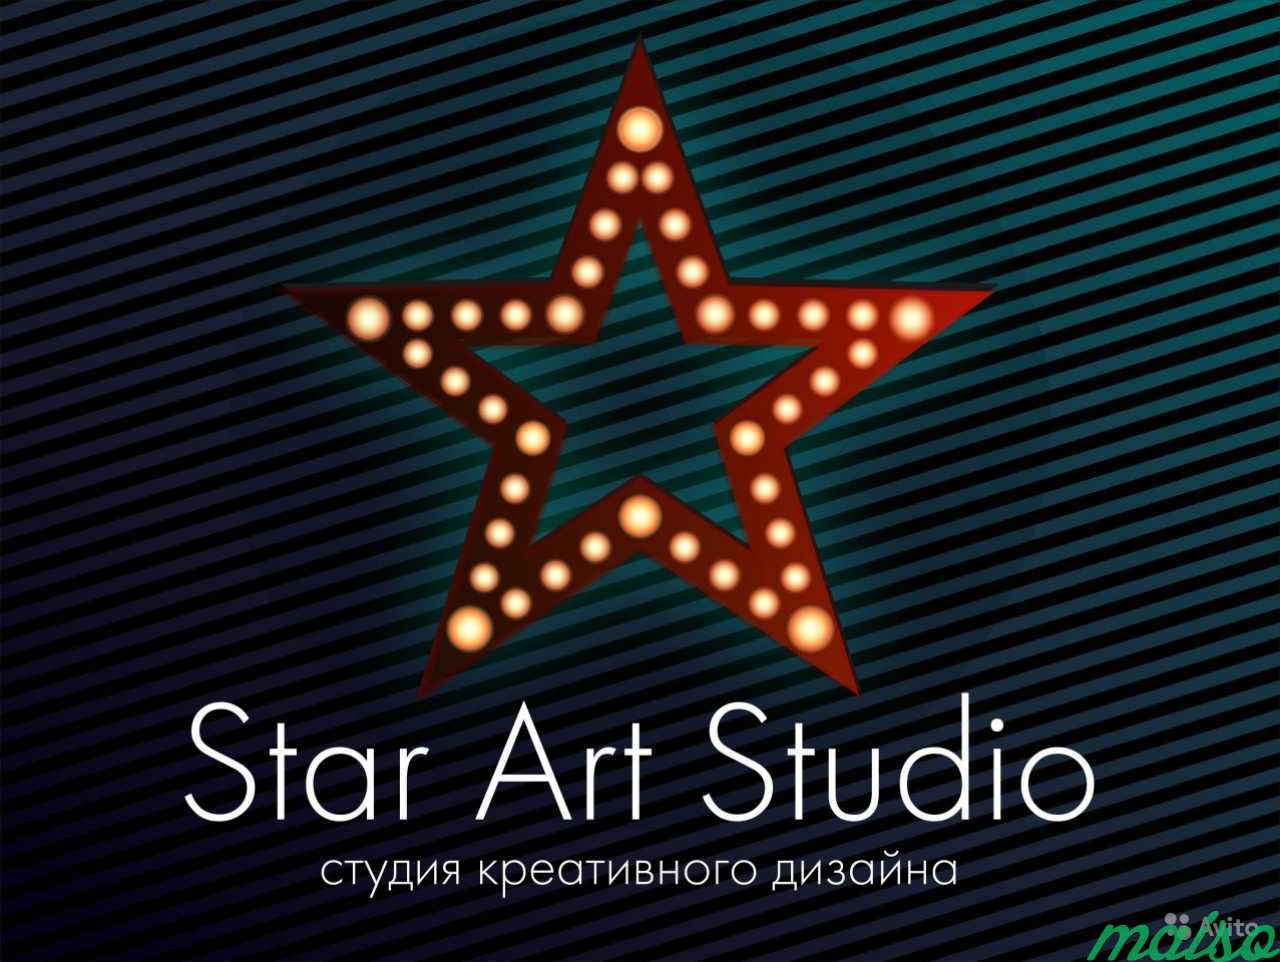 Star art studio